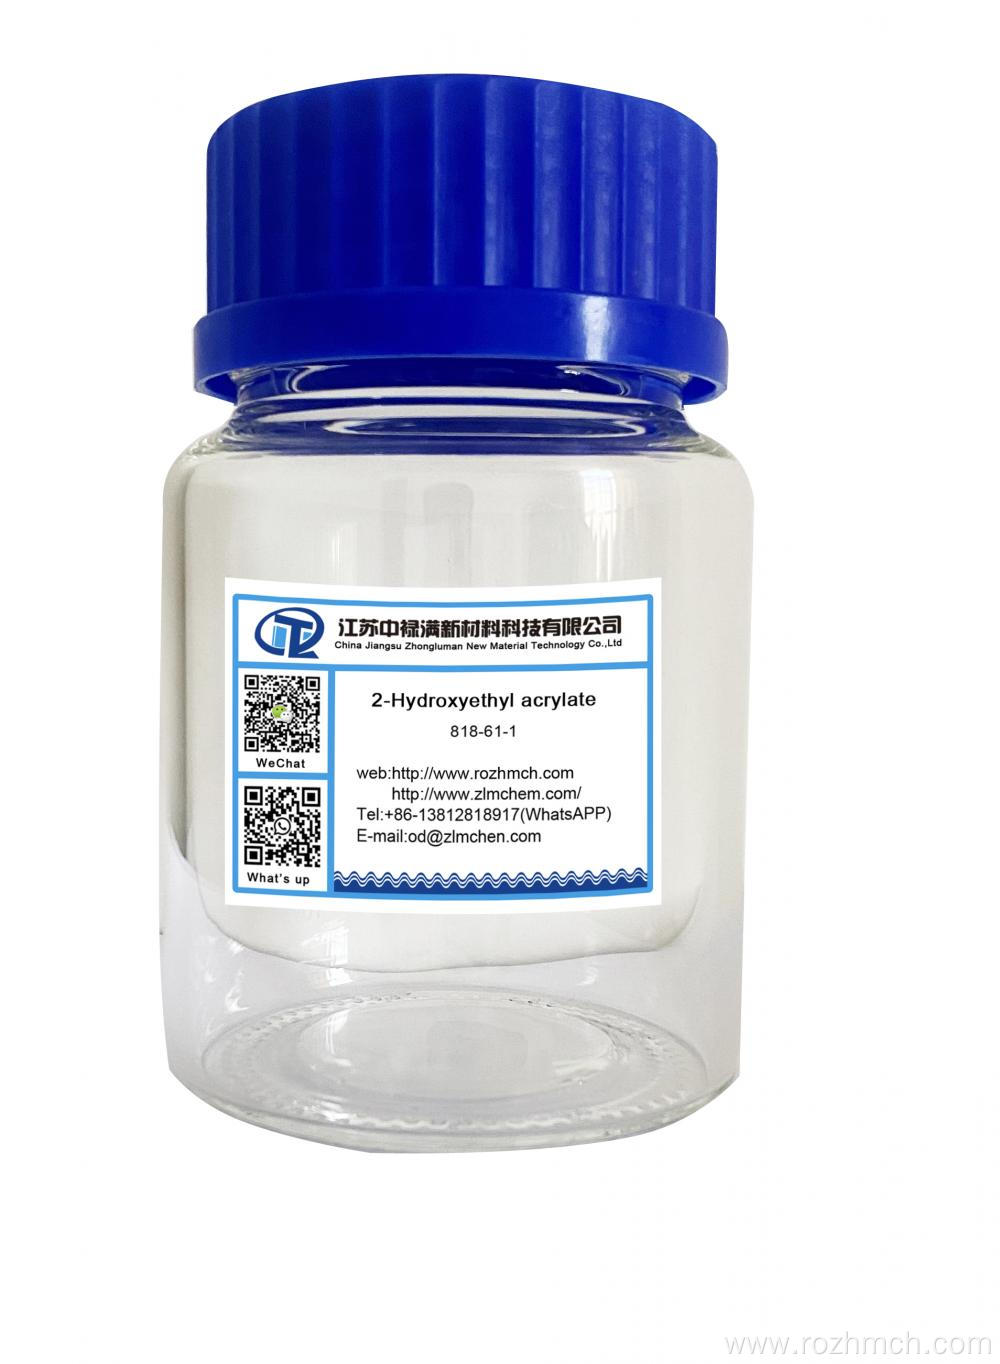 2-Hydroxyethyl acrylate CAS 818-61-1